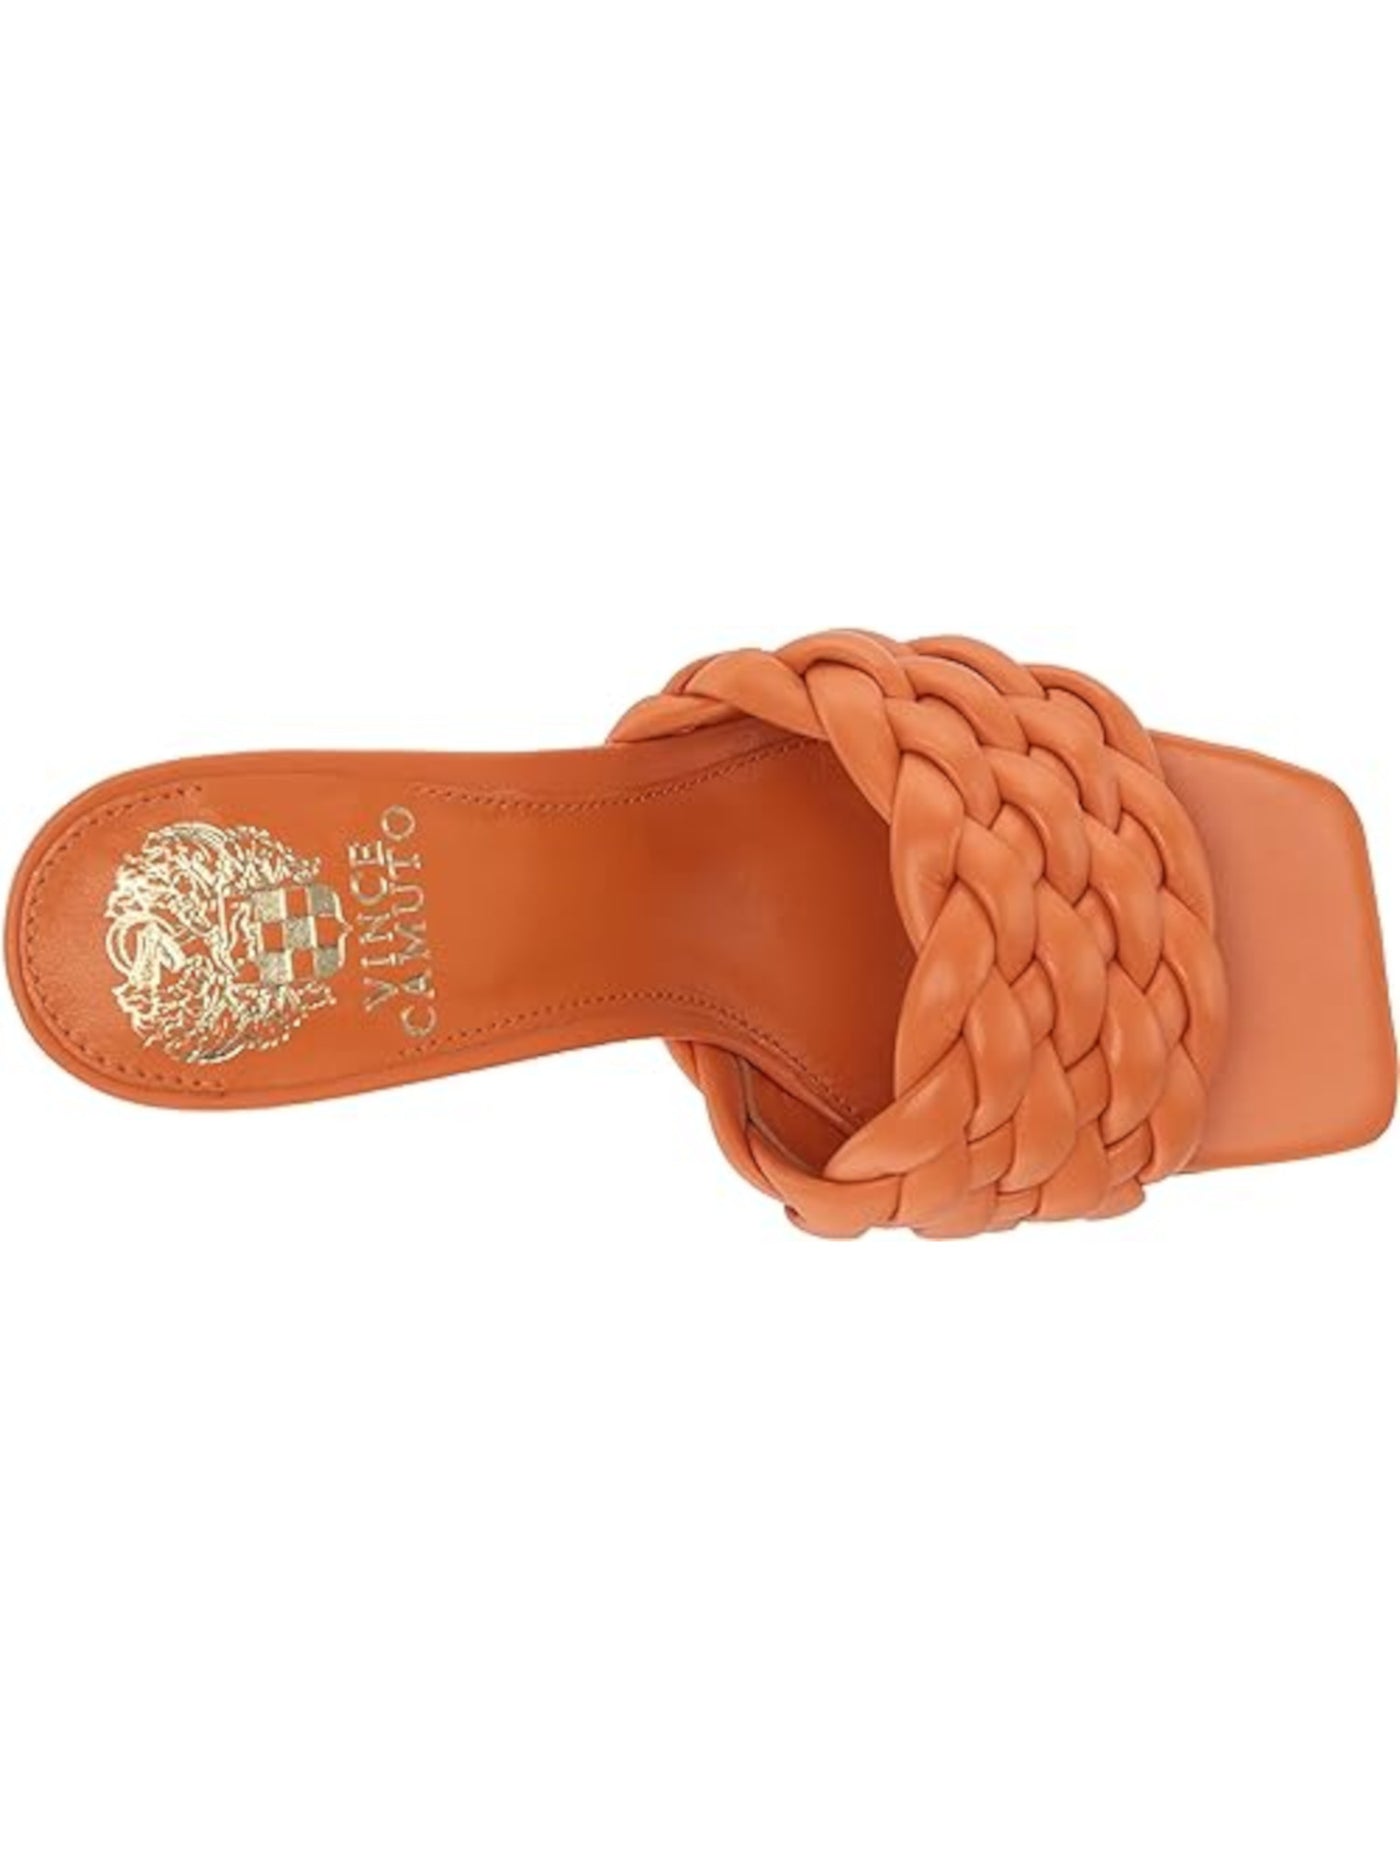 VINCE CAMUTO Womens Orange Woven Padded Brinela Square Toe Flare Slip On Leather Heeled Sandal 7 M